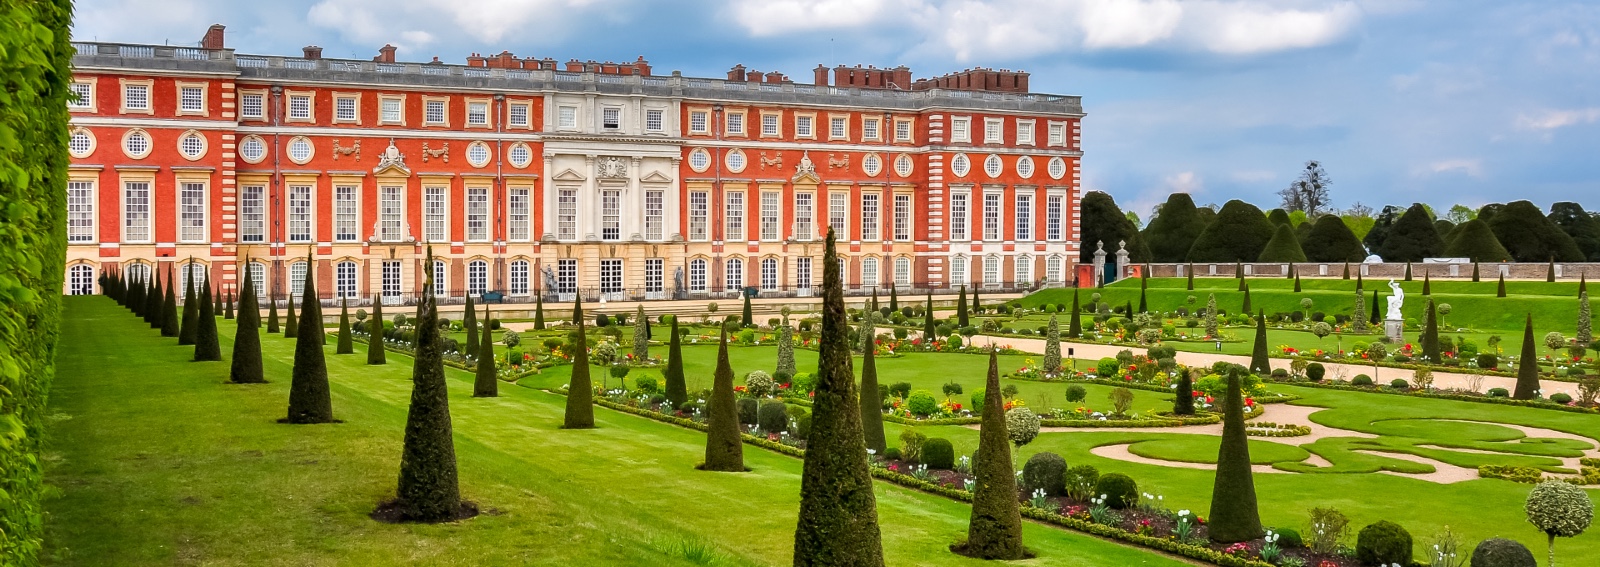 eDreams_Hampton Court Palace-2